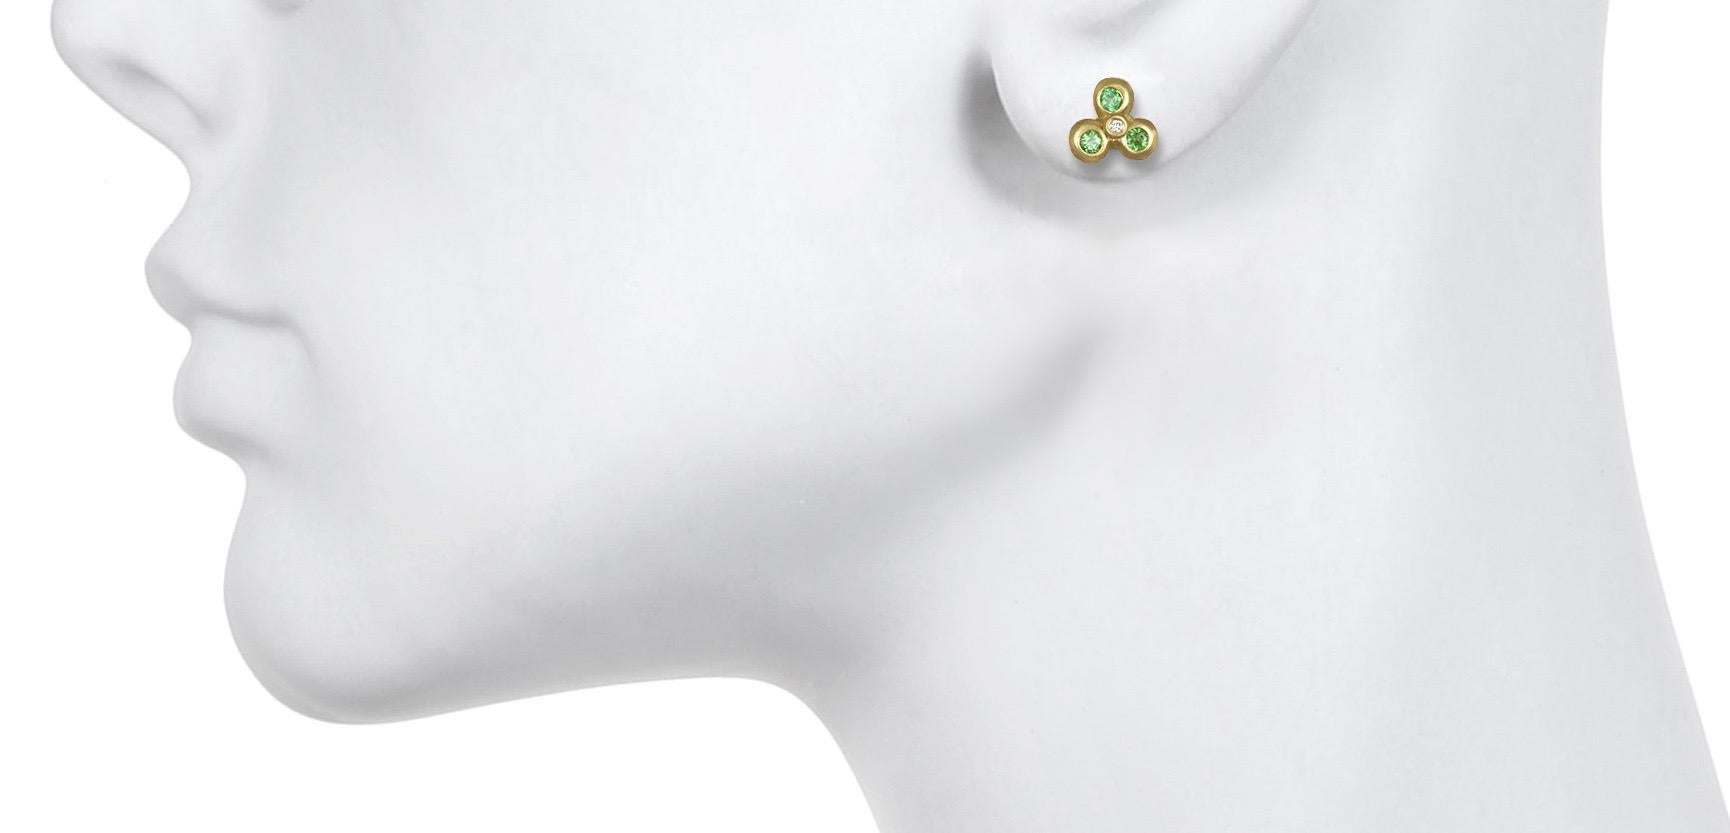 Faye Kim 18K Green Gold Stud Earrings set with Green Tsavorite Gemstones and White Diamonds.
Diameter .312